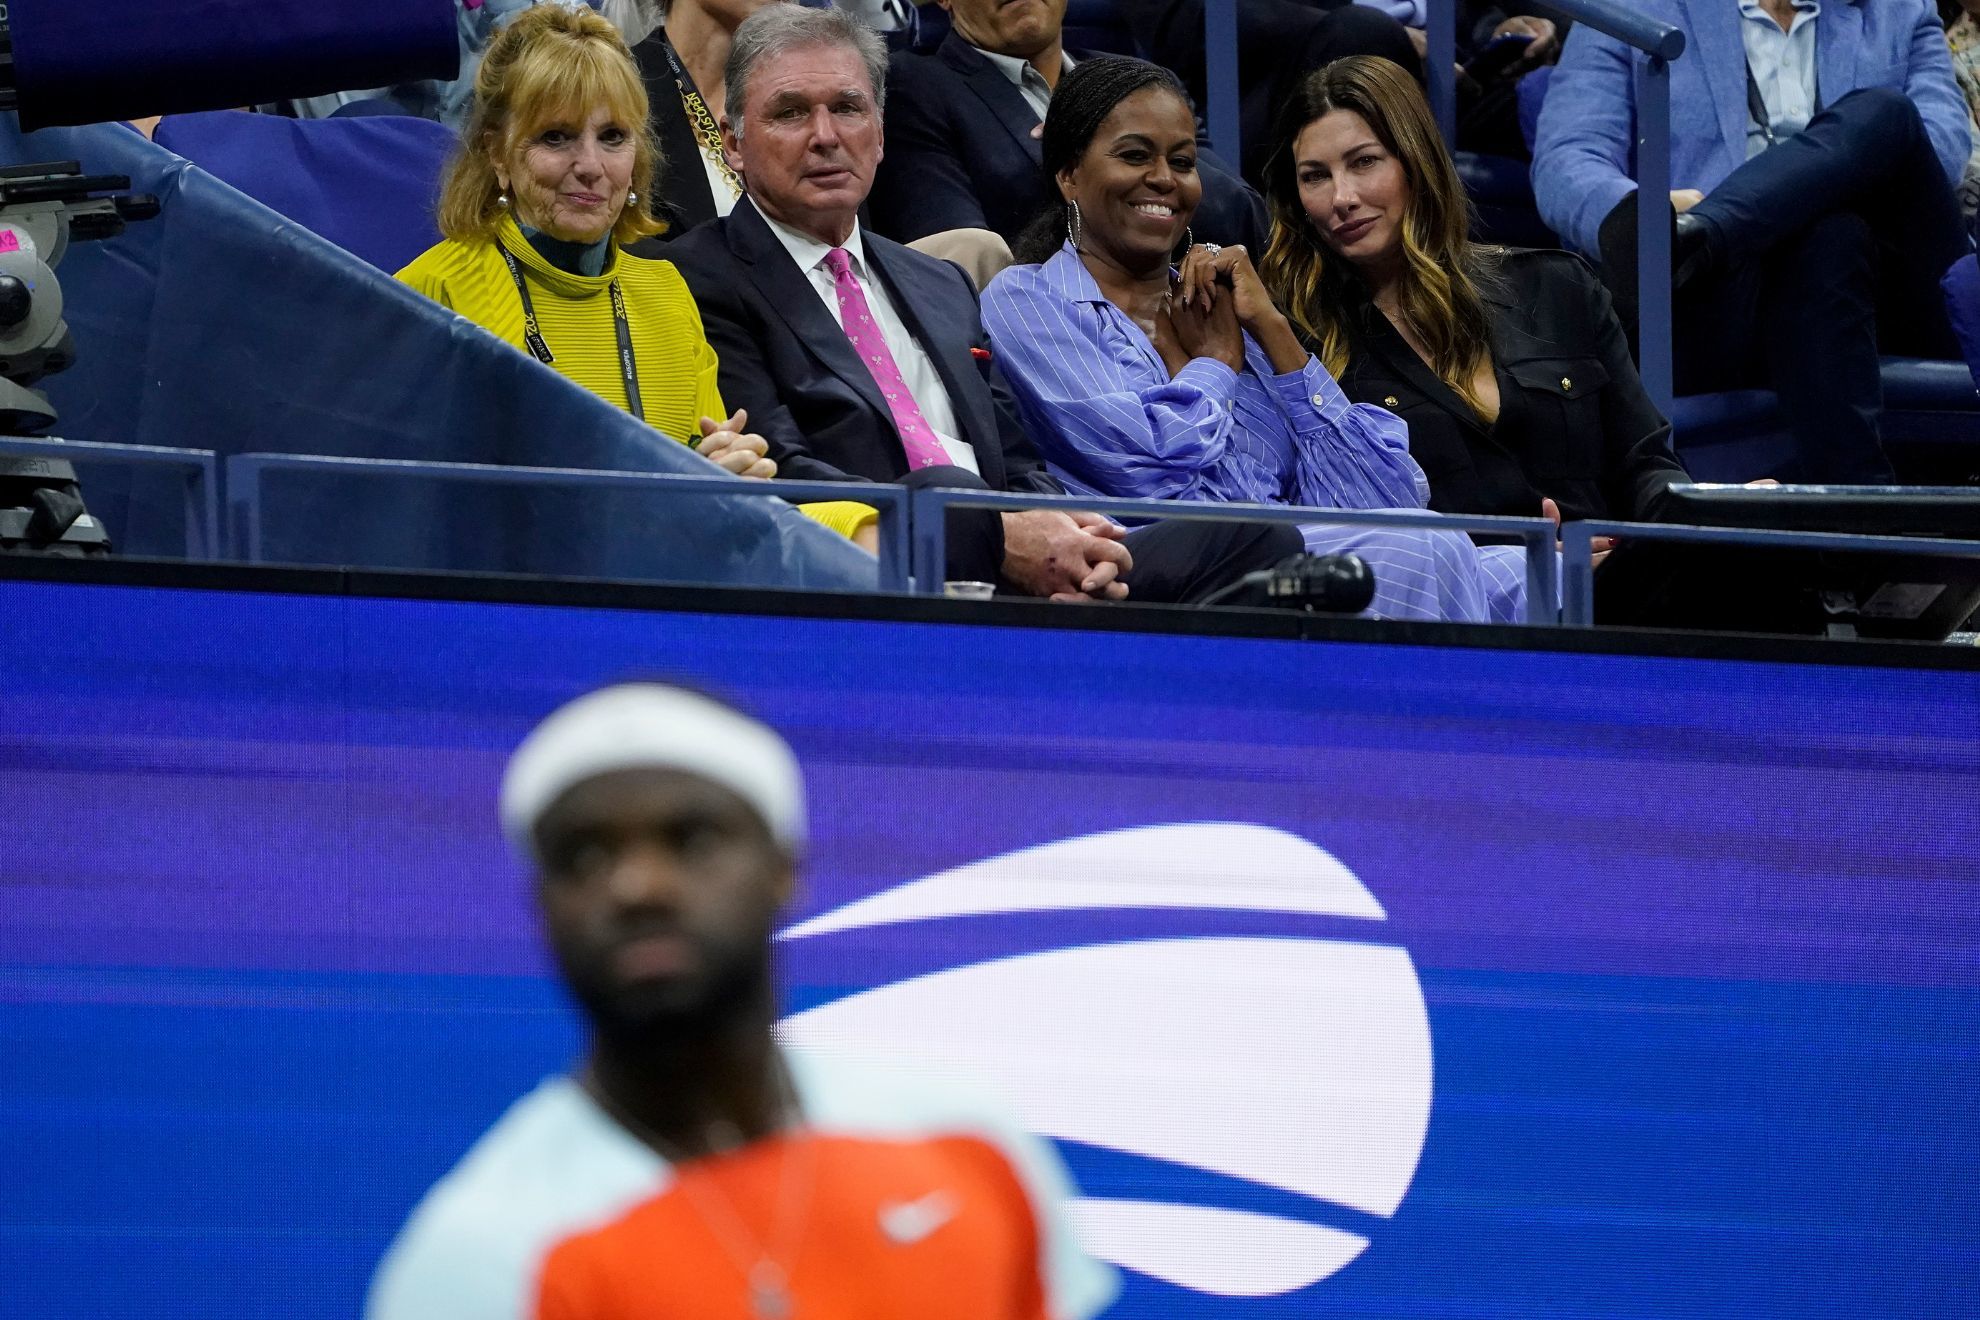 Former FLOTUS Michelle Obama watching Frances Tiafoe at US Open / AP